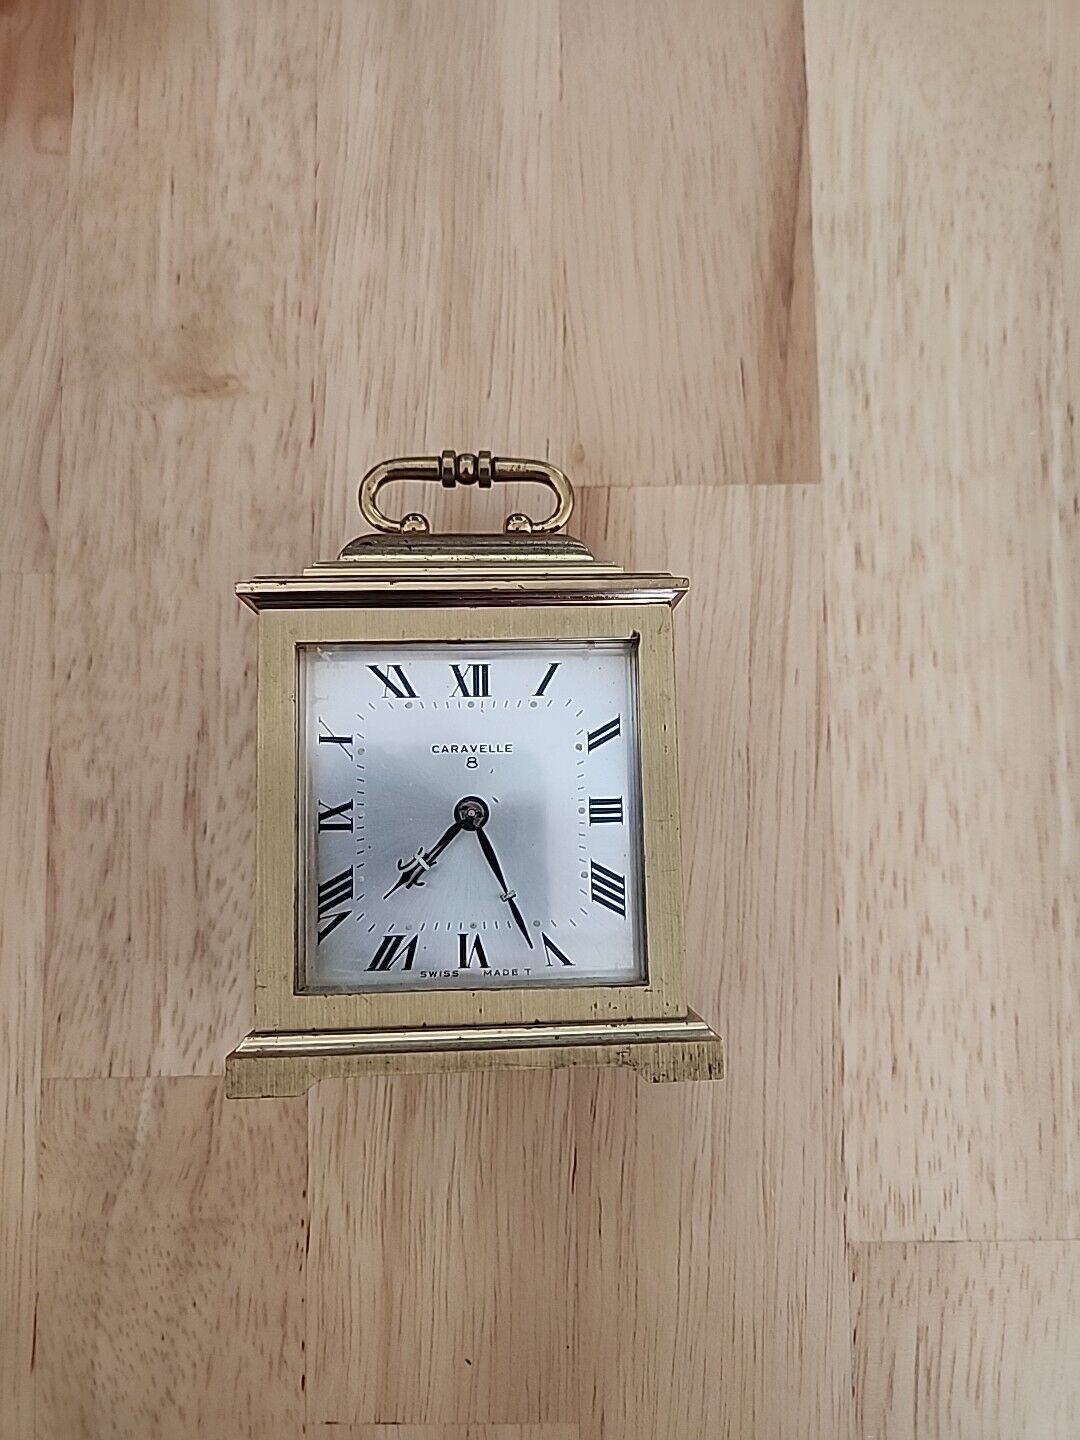 Vintage Caravelle Alarm Clock  made by Bulova